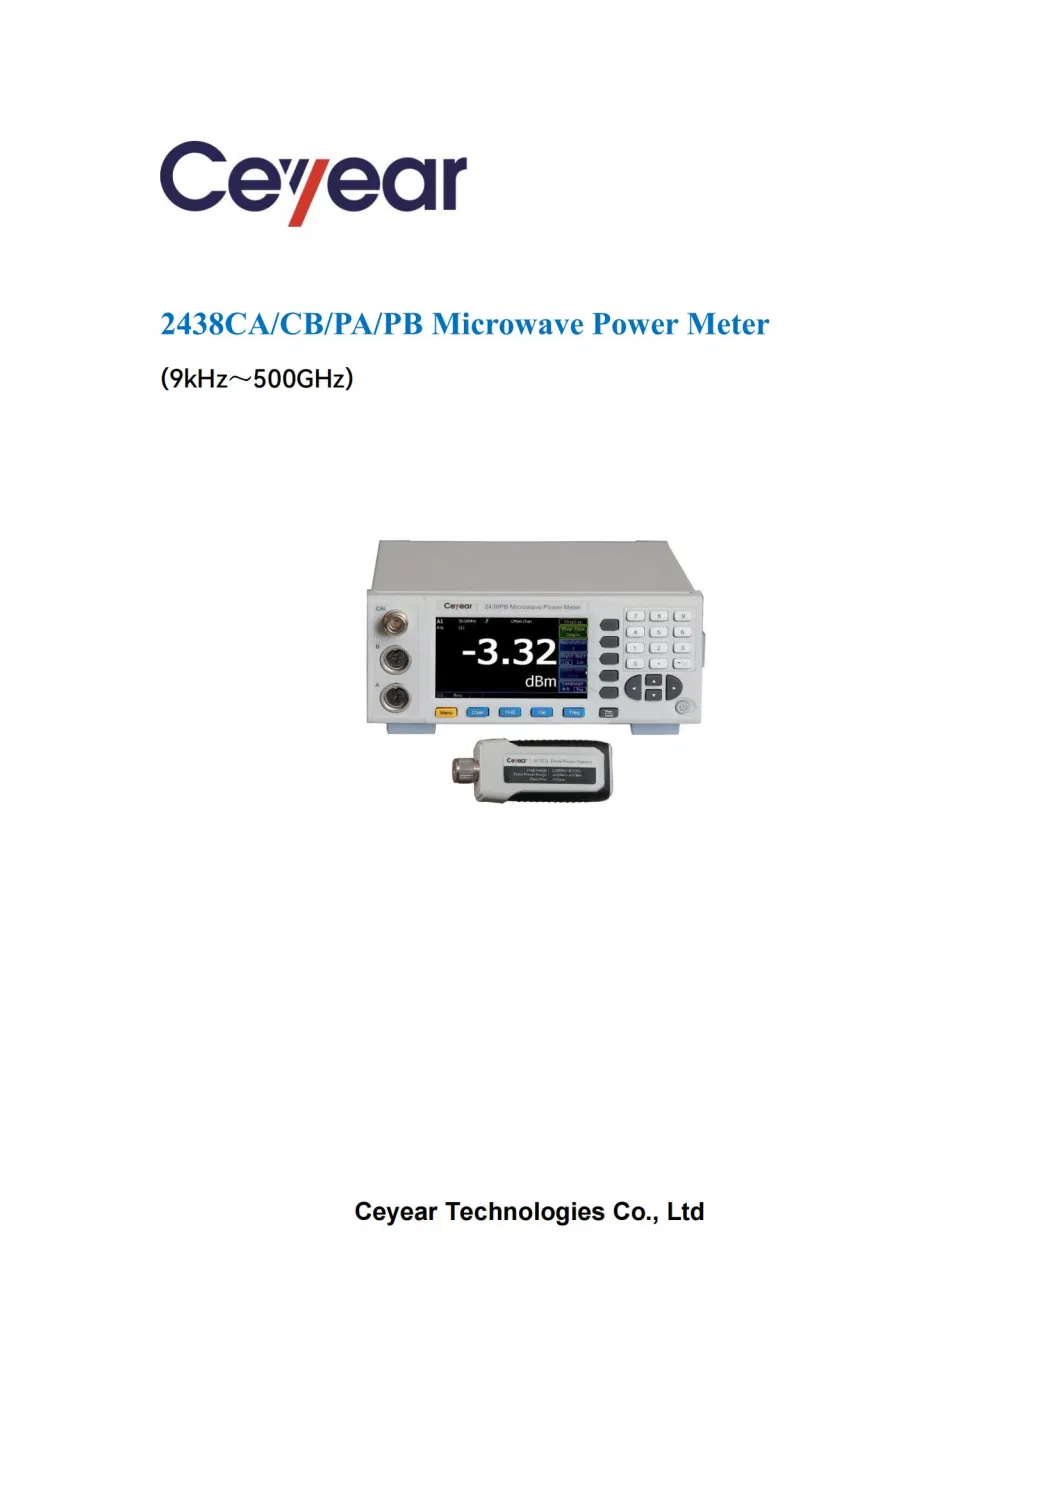 Ceyear2438 Series 9kHz to 500GHz Microwave Power Meter/Frequency Meter